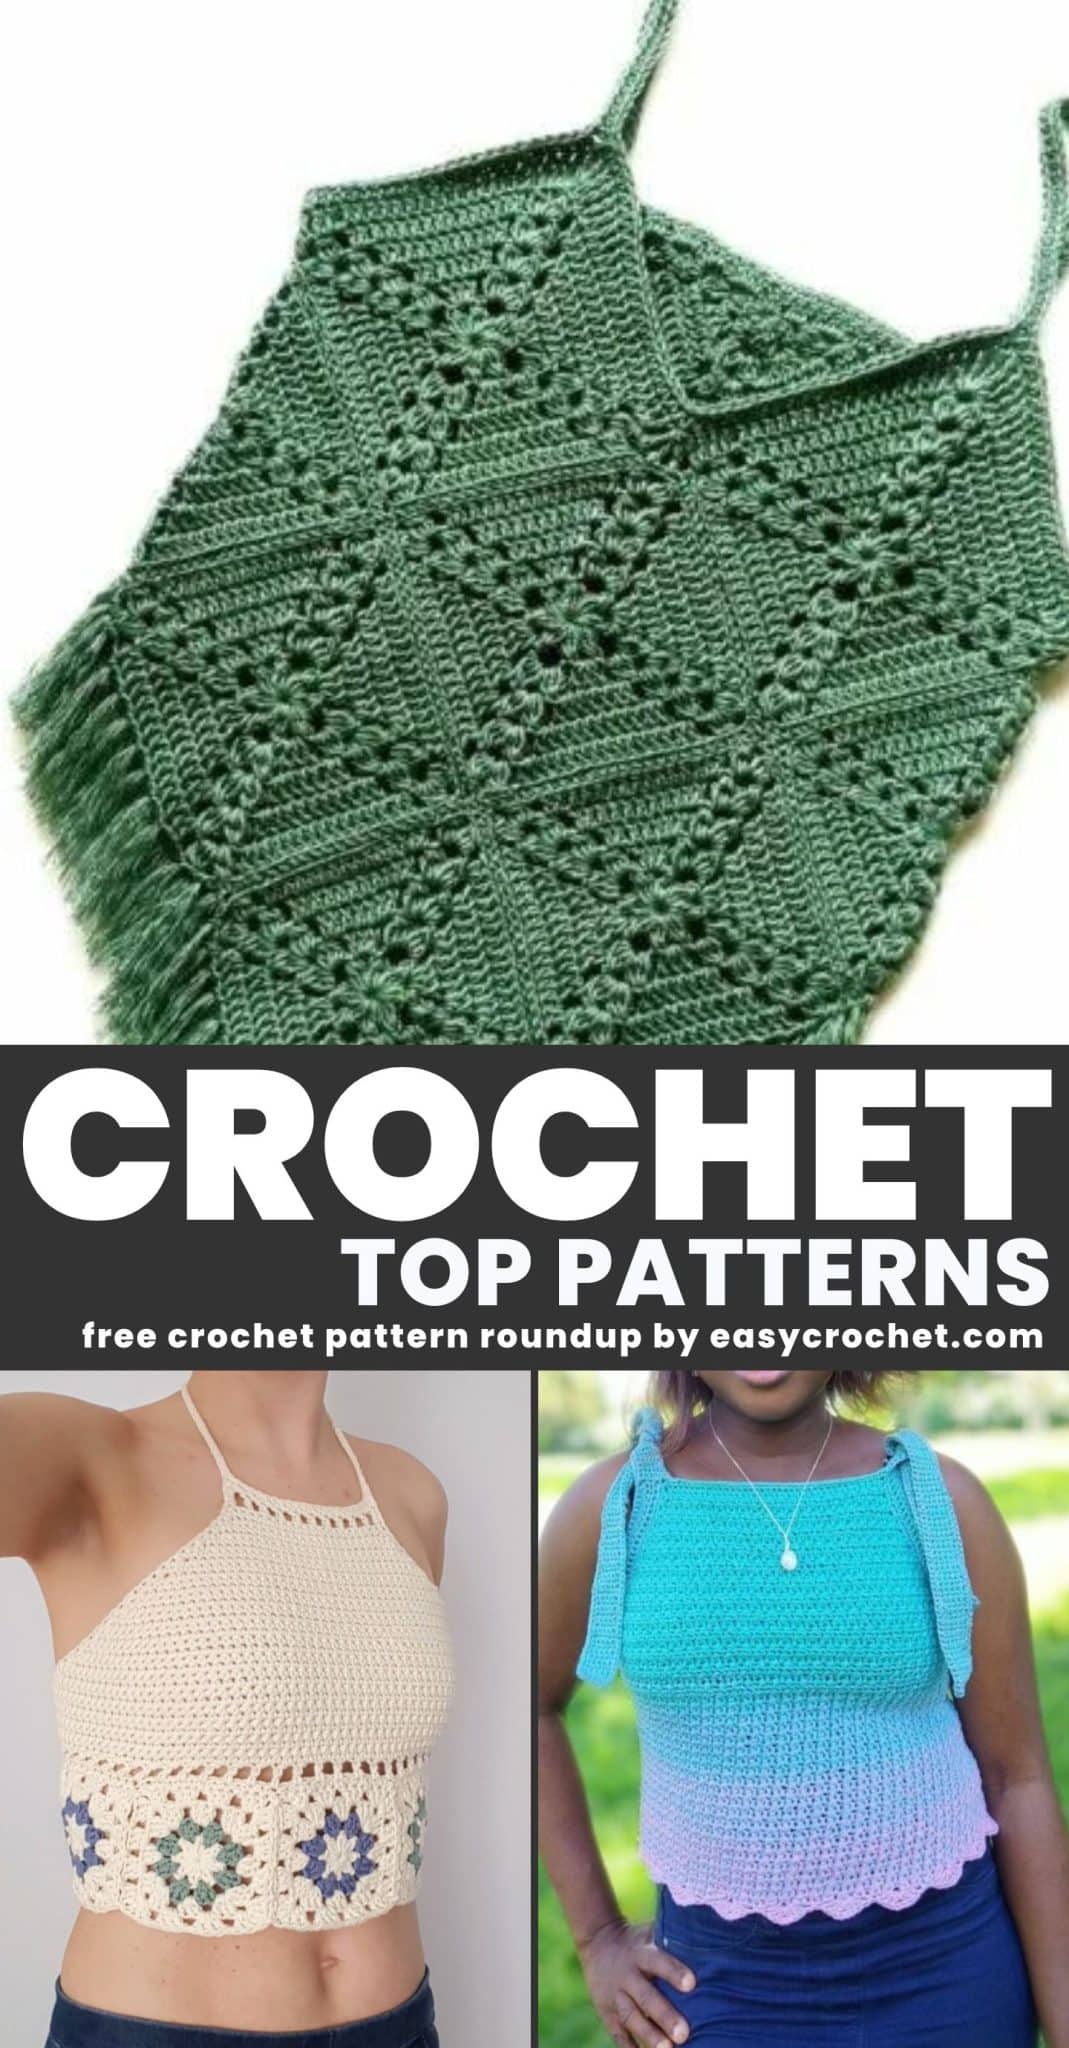 Plus Size Green Crochet Trim Long Sleeve Tunic Top